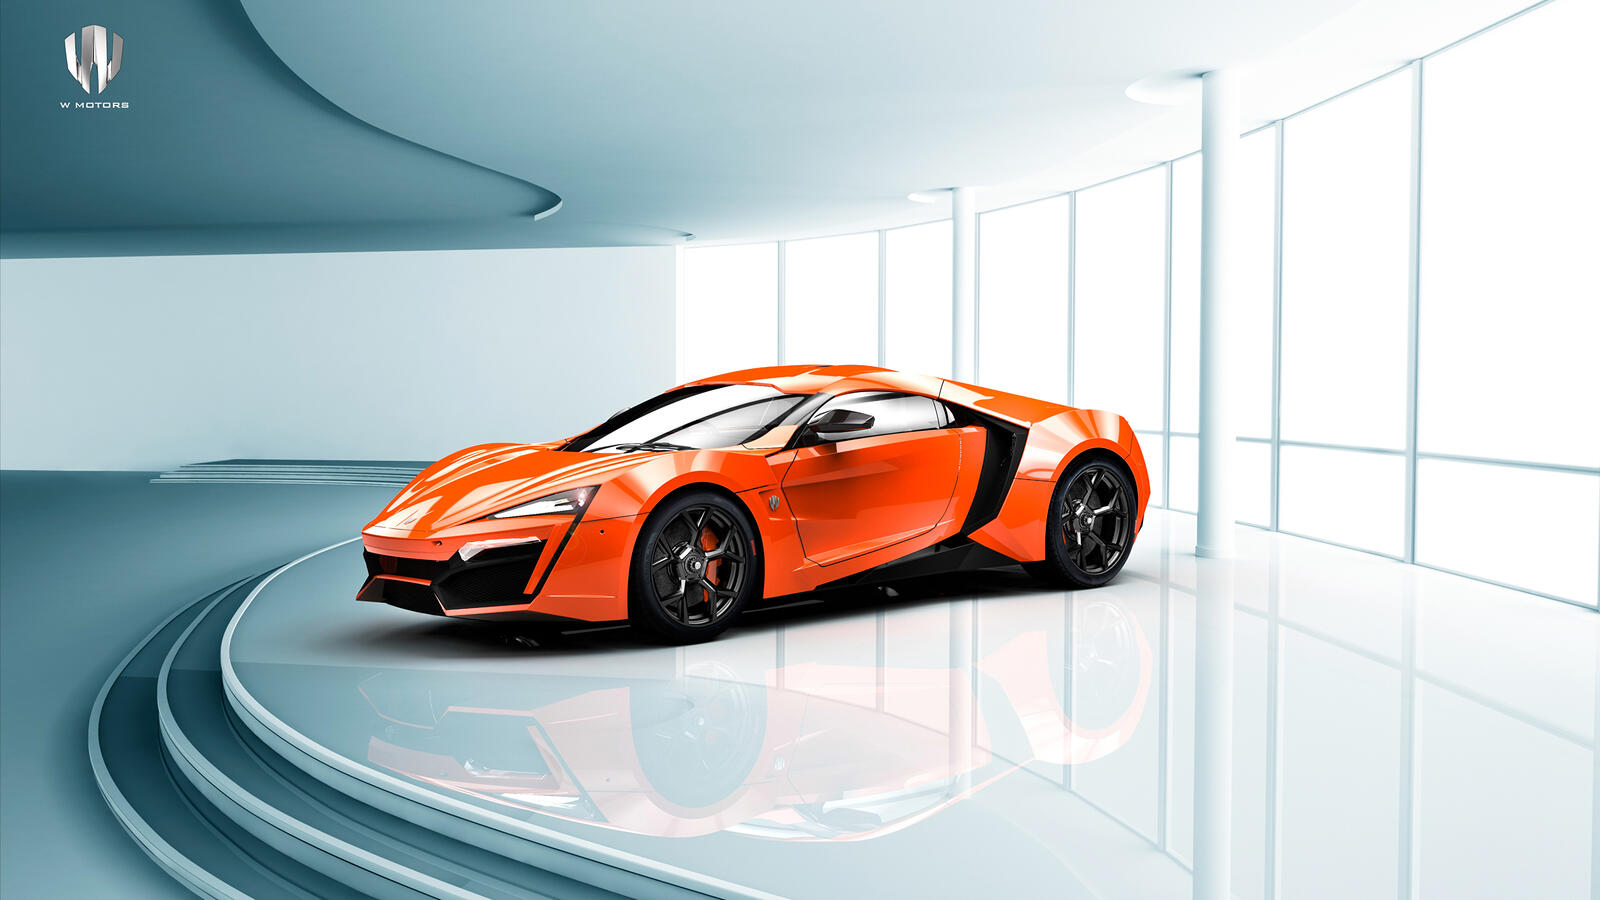 Wallpapers lykan hypersport-car model orange car side view on the desktop